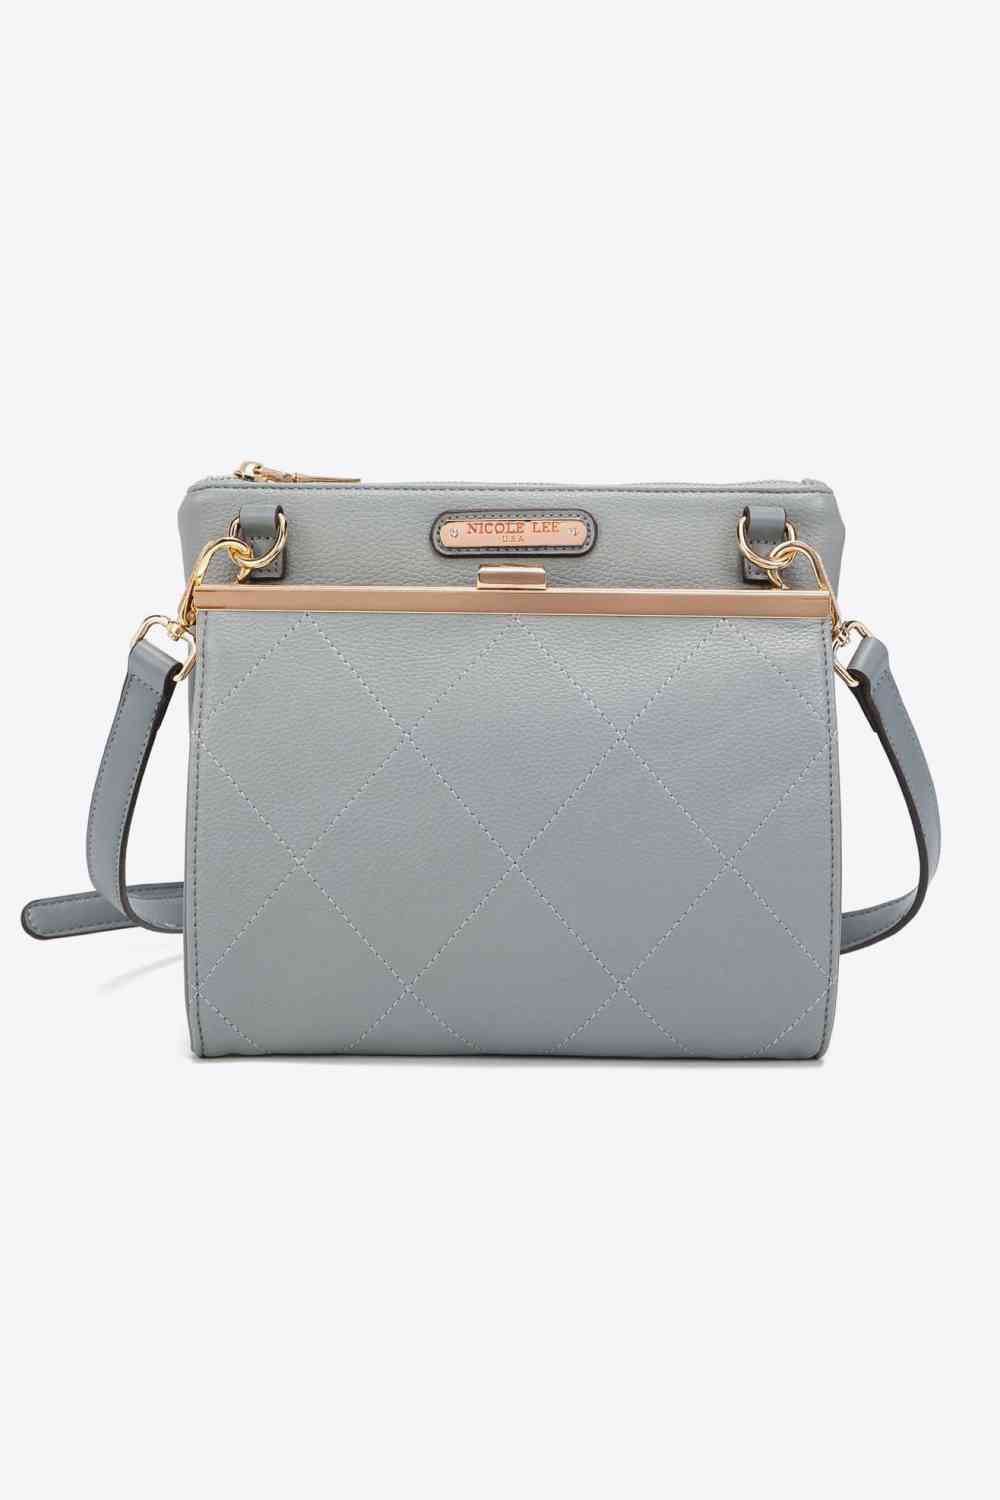 TEEK - NL All Day Everyday Handbag BAG TEEK Trend Gray Dawn  